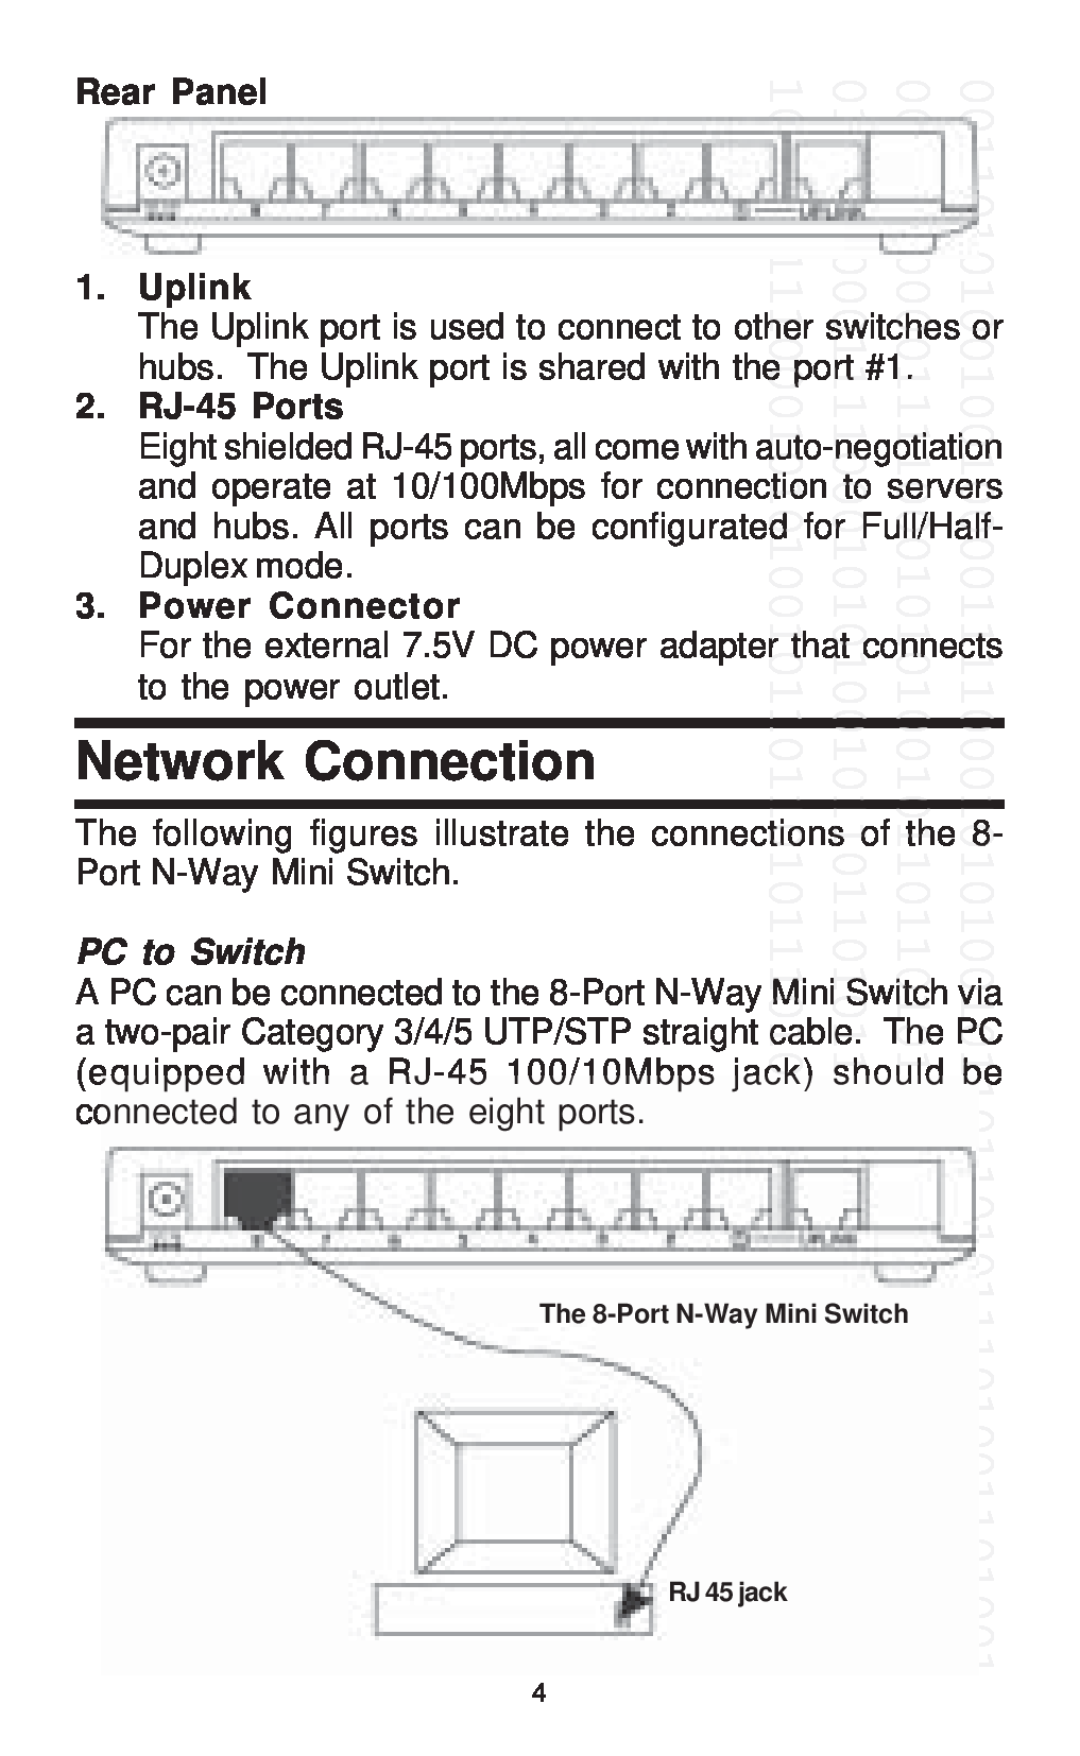 Farallon Communications 8-Port 10/100M Network Connection, Rear Panel, Uplink, RJ-45 Ports, Duplex mode, Power Connector 